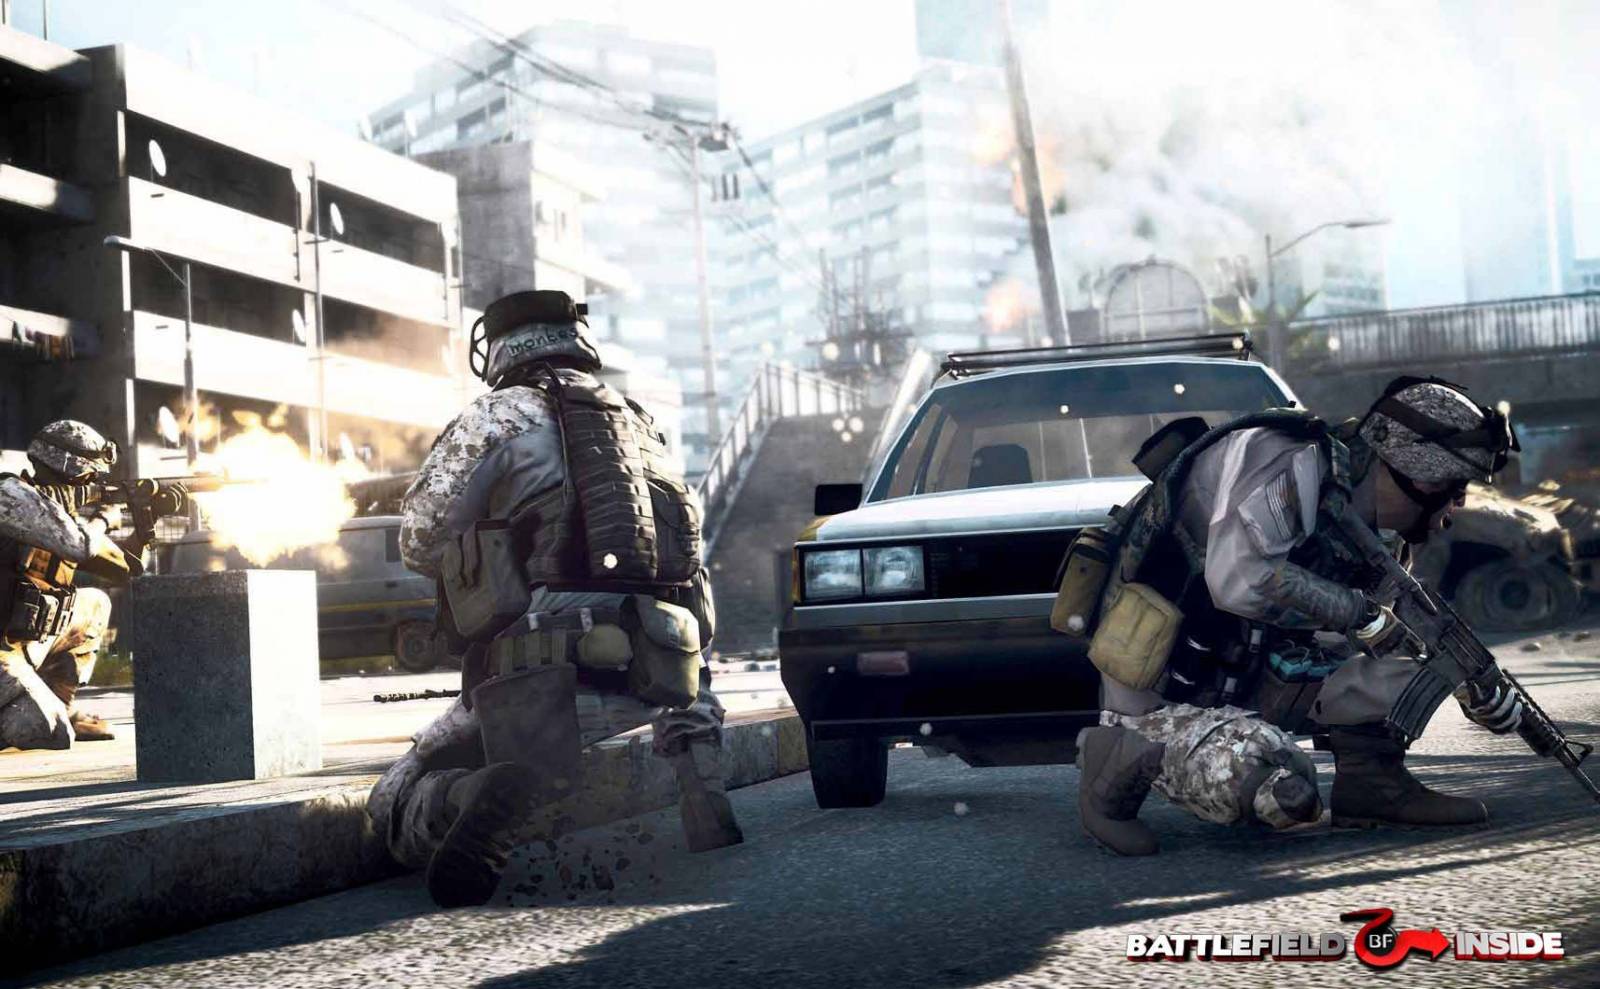 Какой лично Вы ожидаете продукт от ЕА под названием Battlefield Bad Company 3?